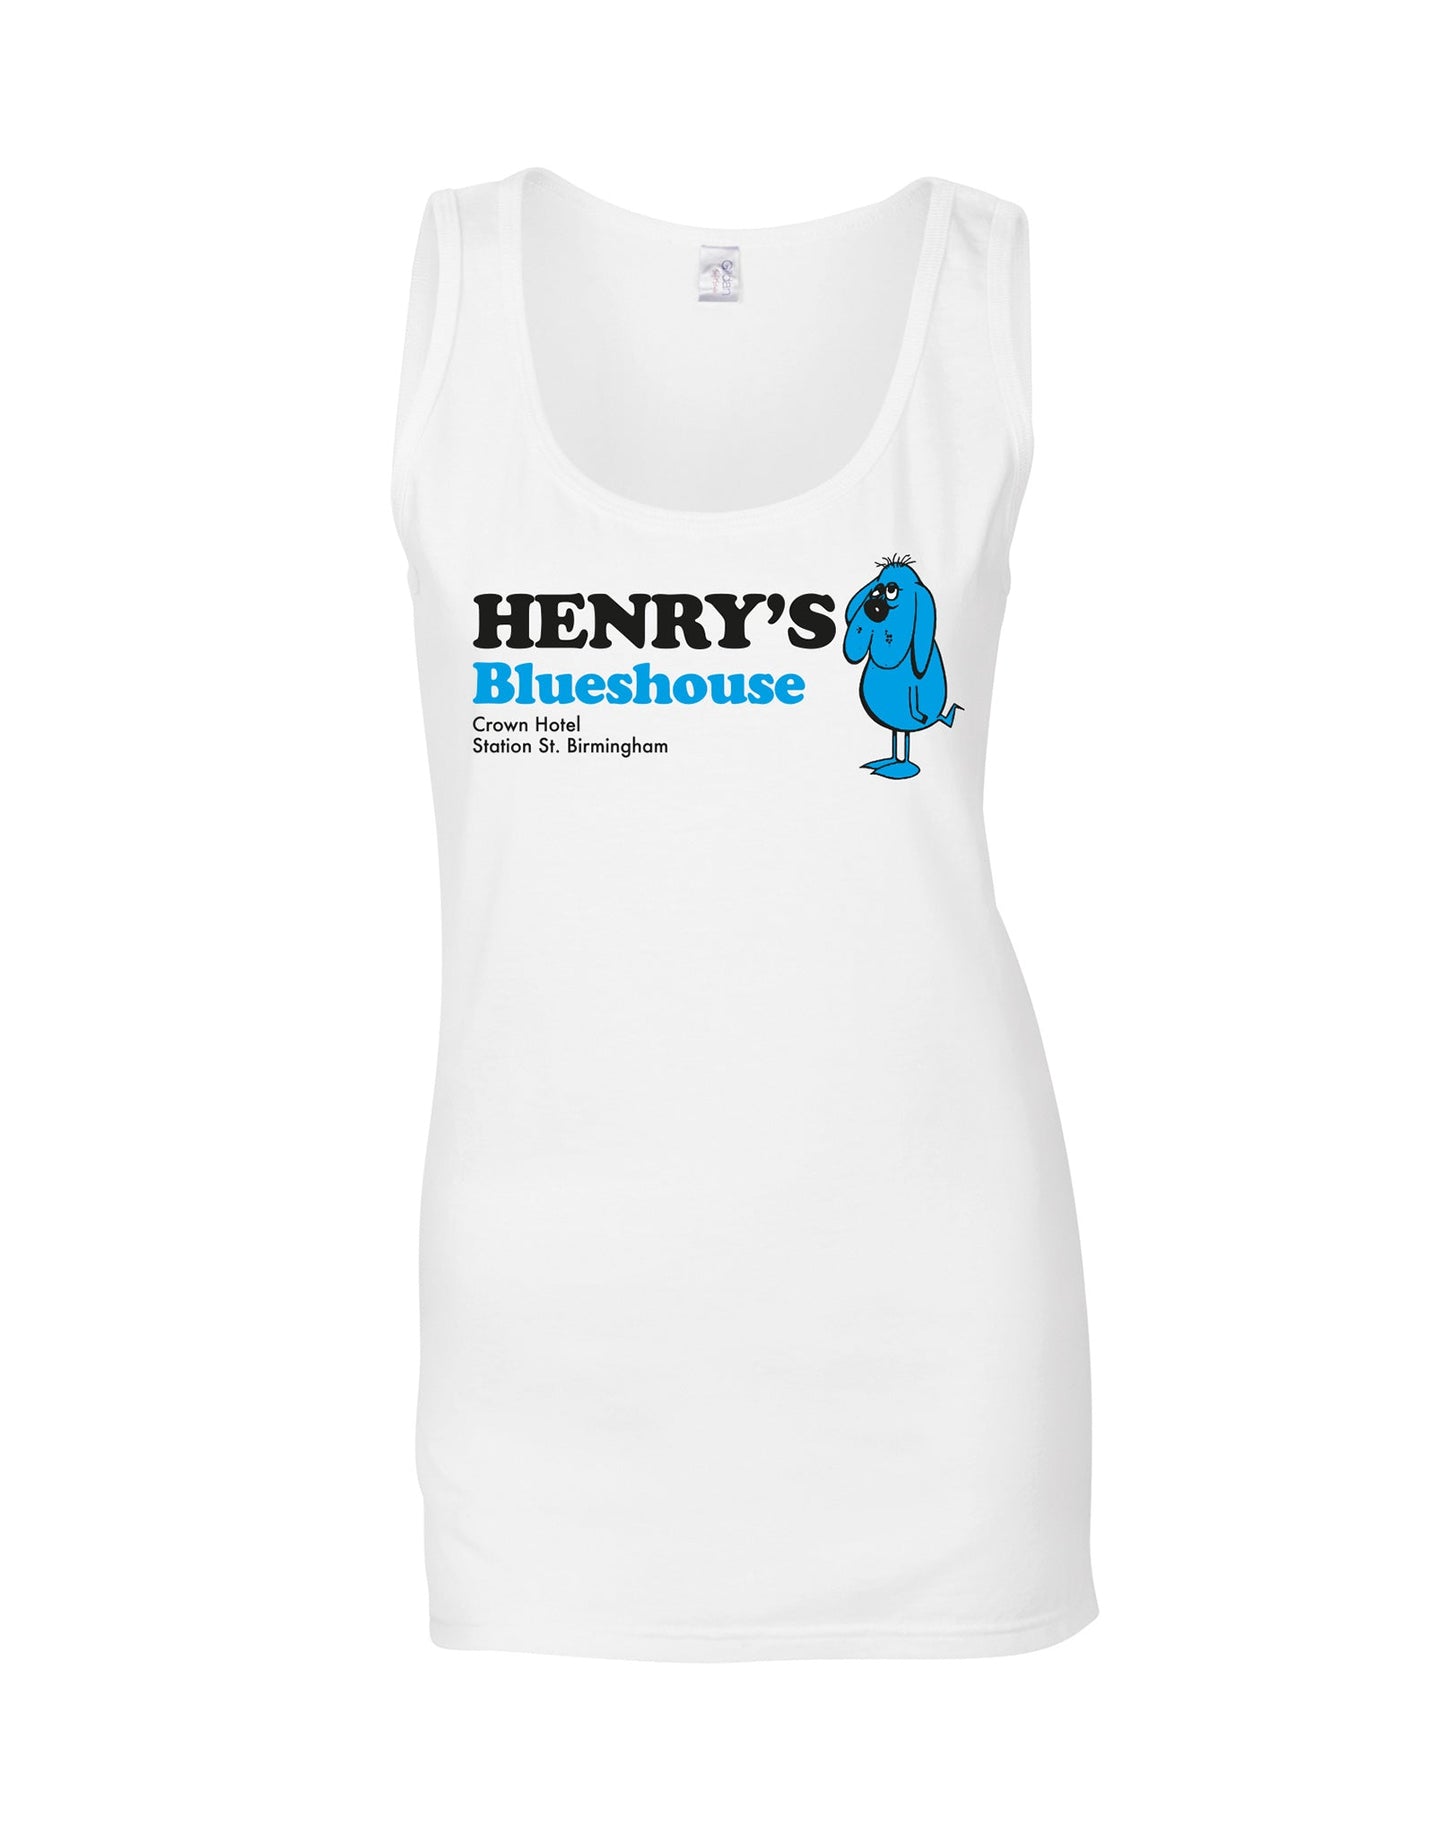 Henry's Blueshouse ladies fit vest - various colours - Dirty Stop Outs